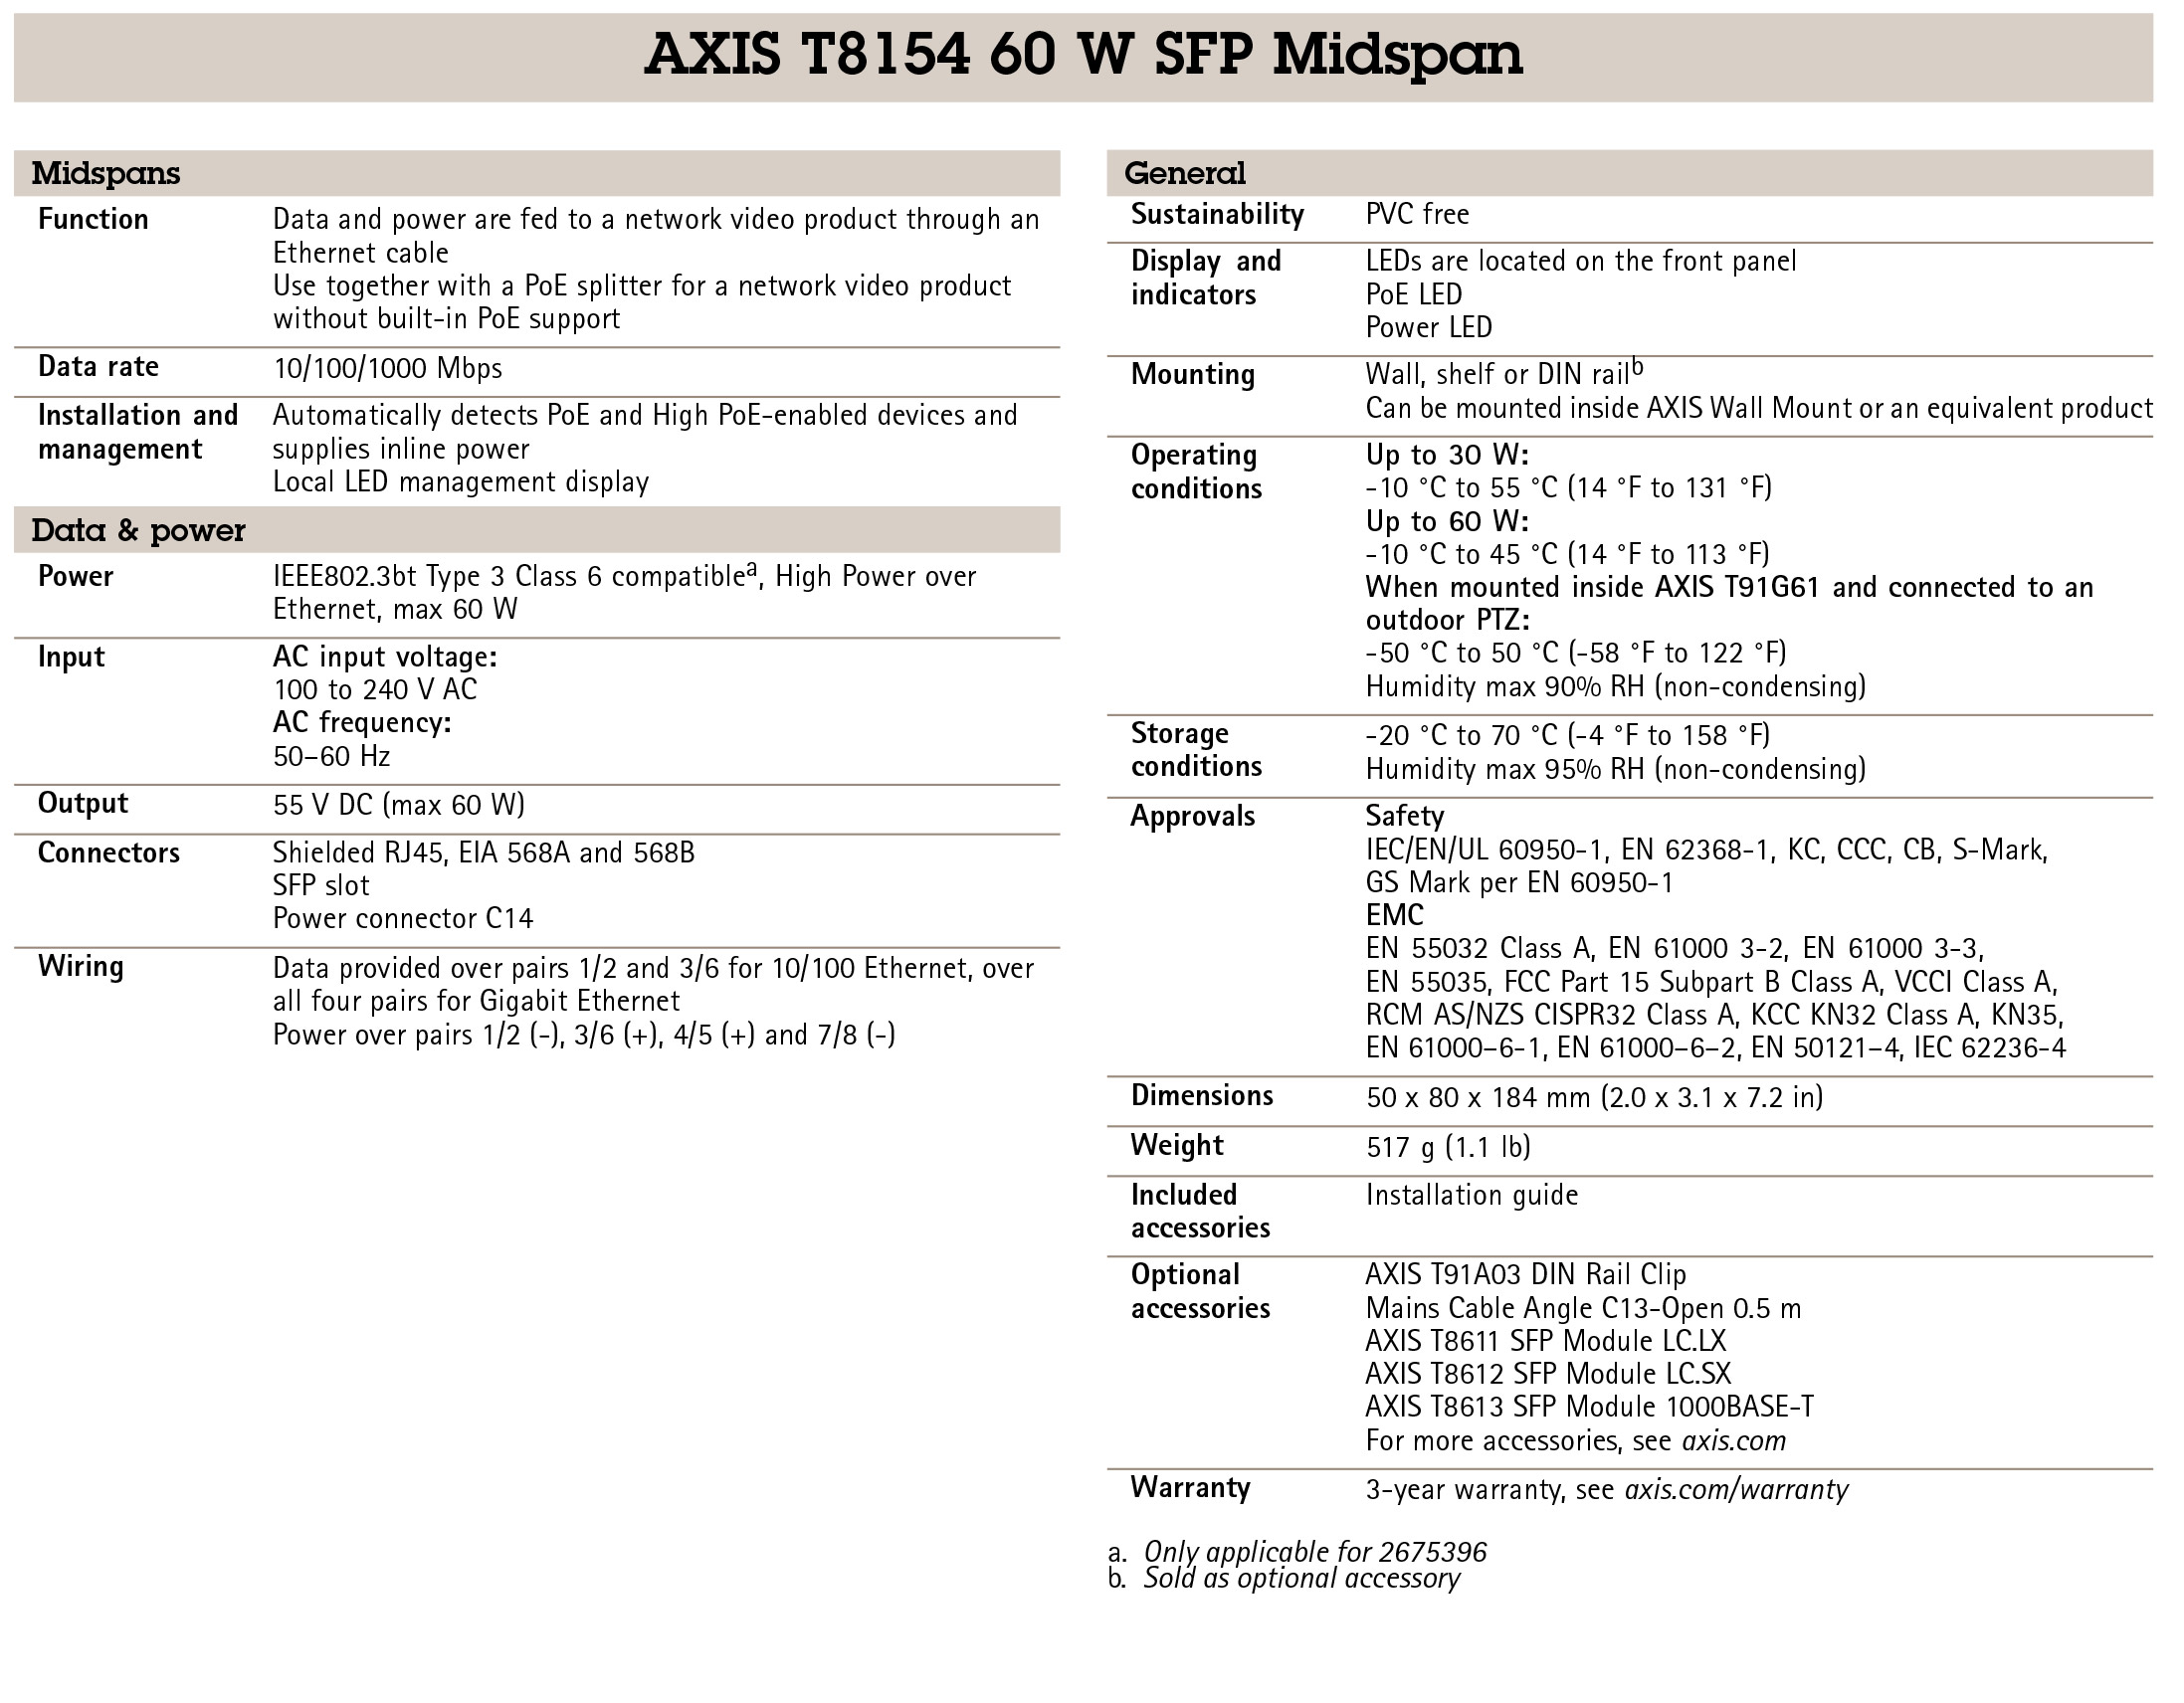 AXIS T8154 60W SFP Midspan